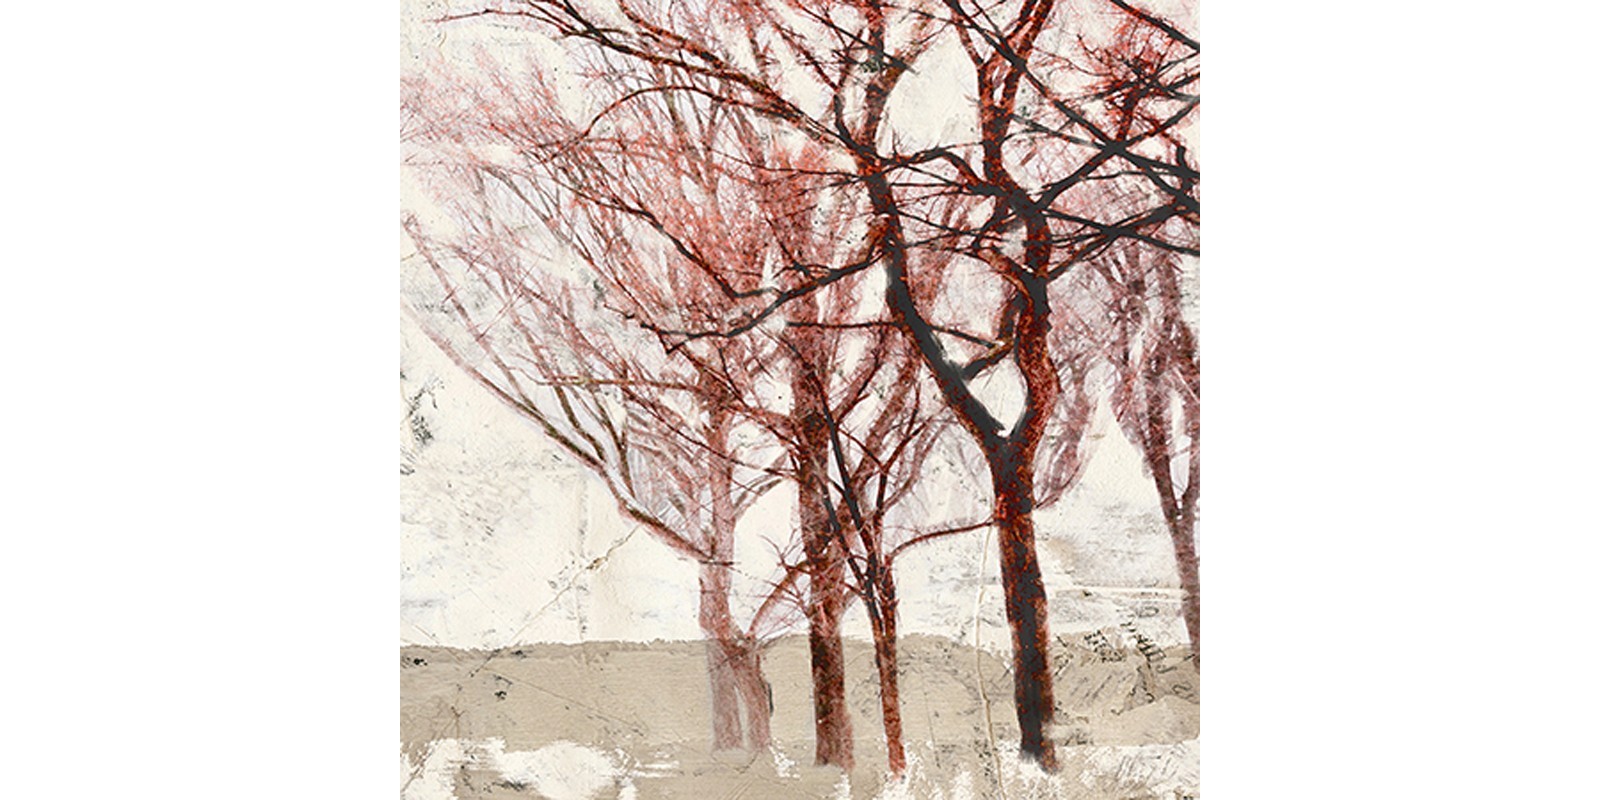 Alessio Aprile - Rusty Trees II